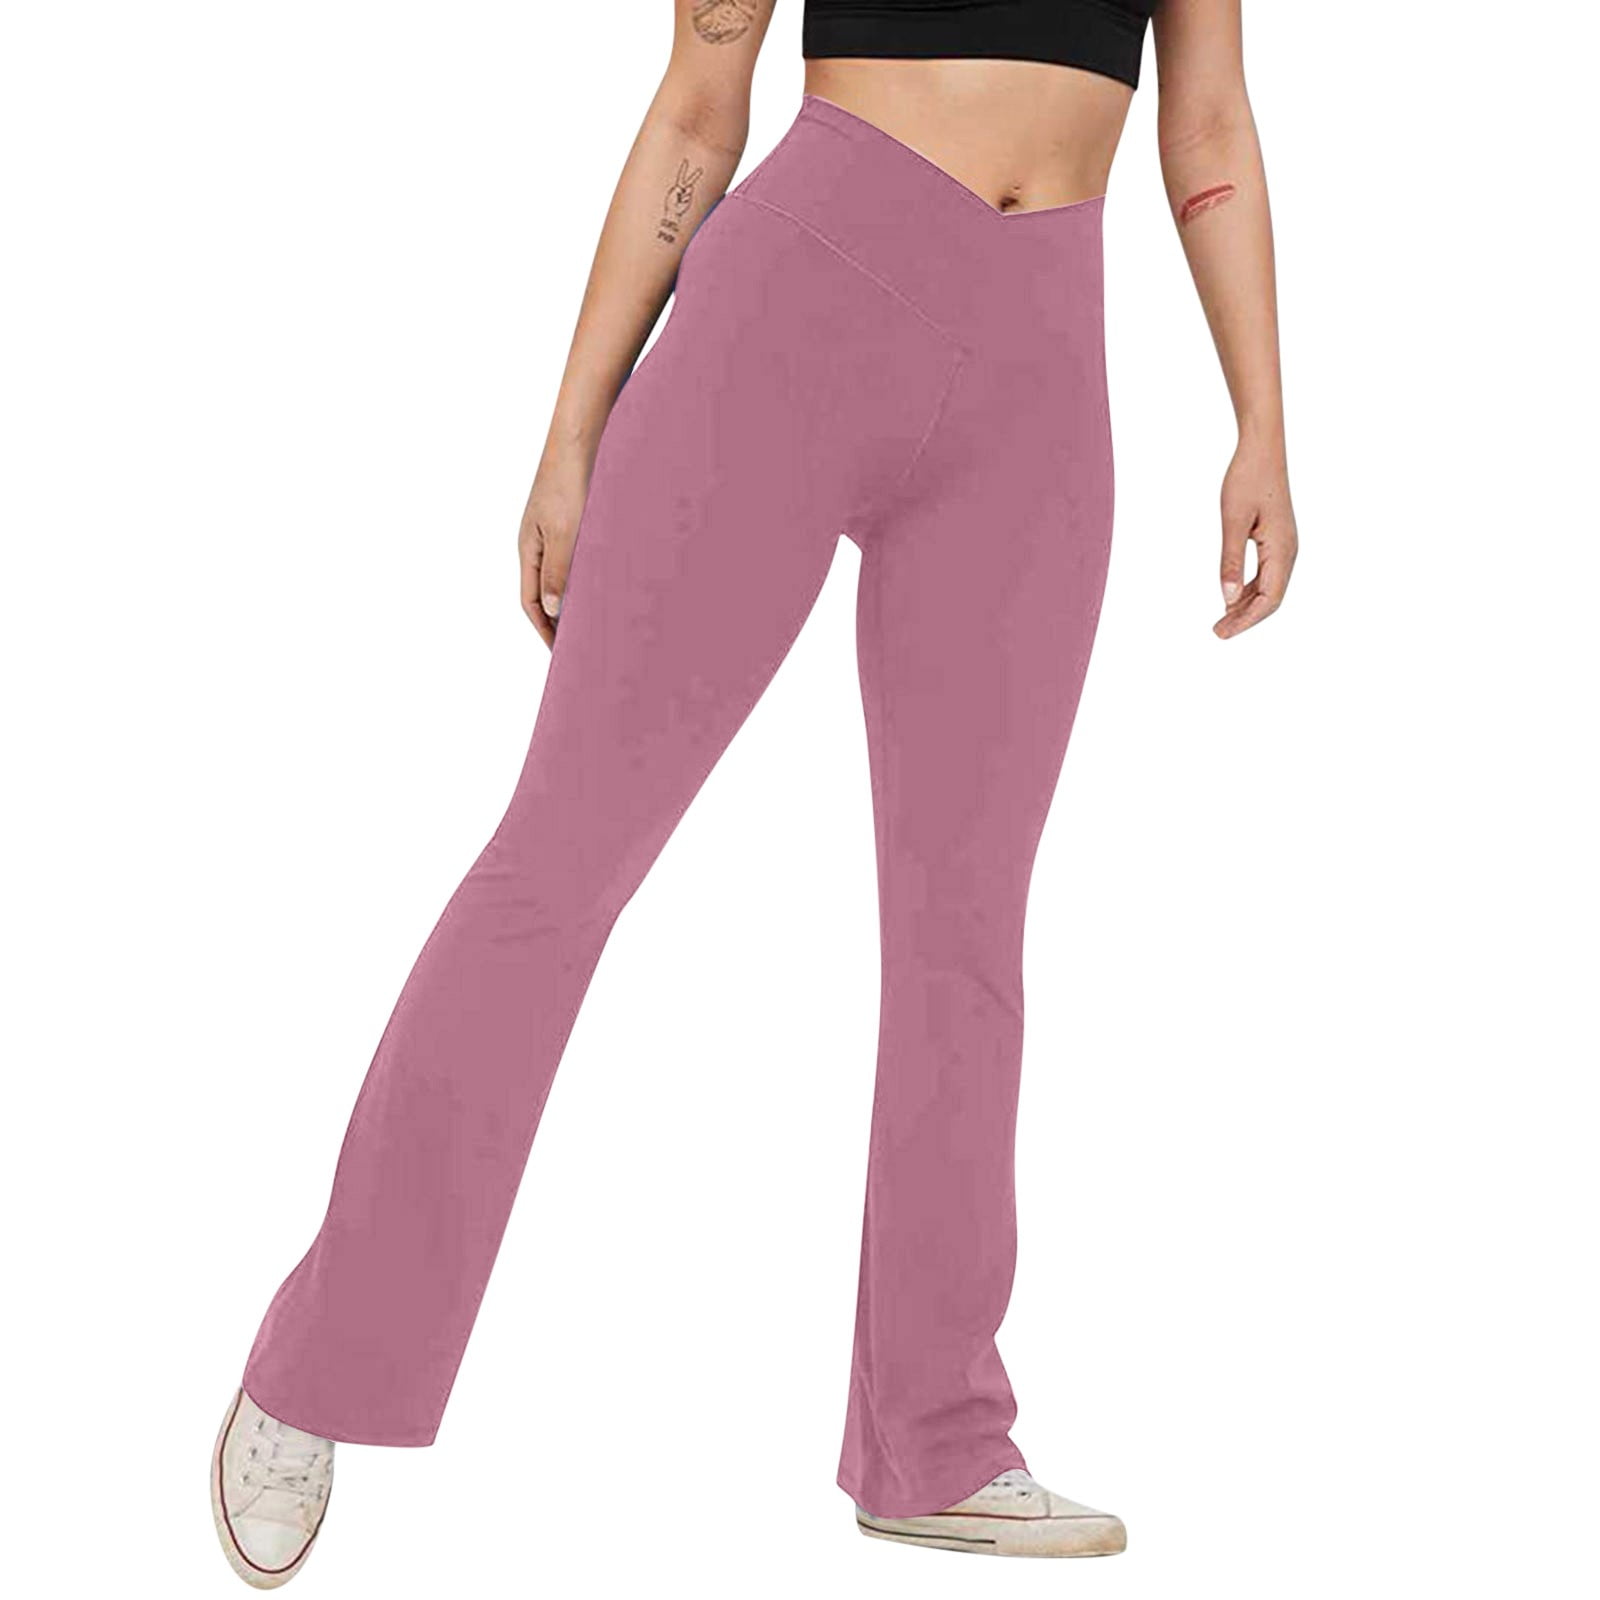 HSMQHJWE Yoga Pants Short Length Women Long Dress Pants For Women Business  Casual Pants Cotton Side Pocket Shopping Girls Women Running Pants